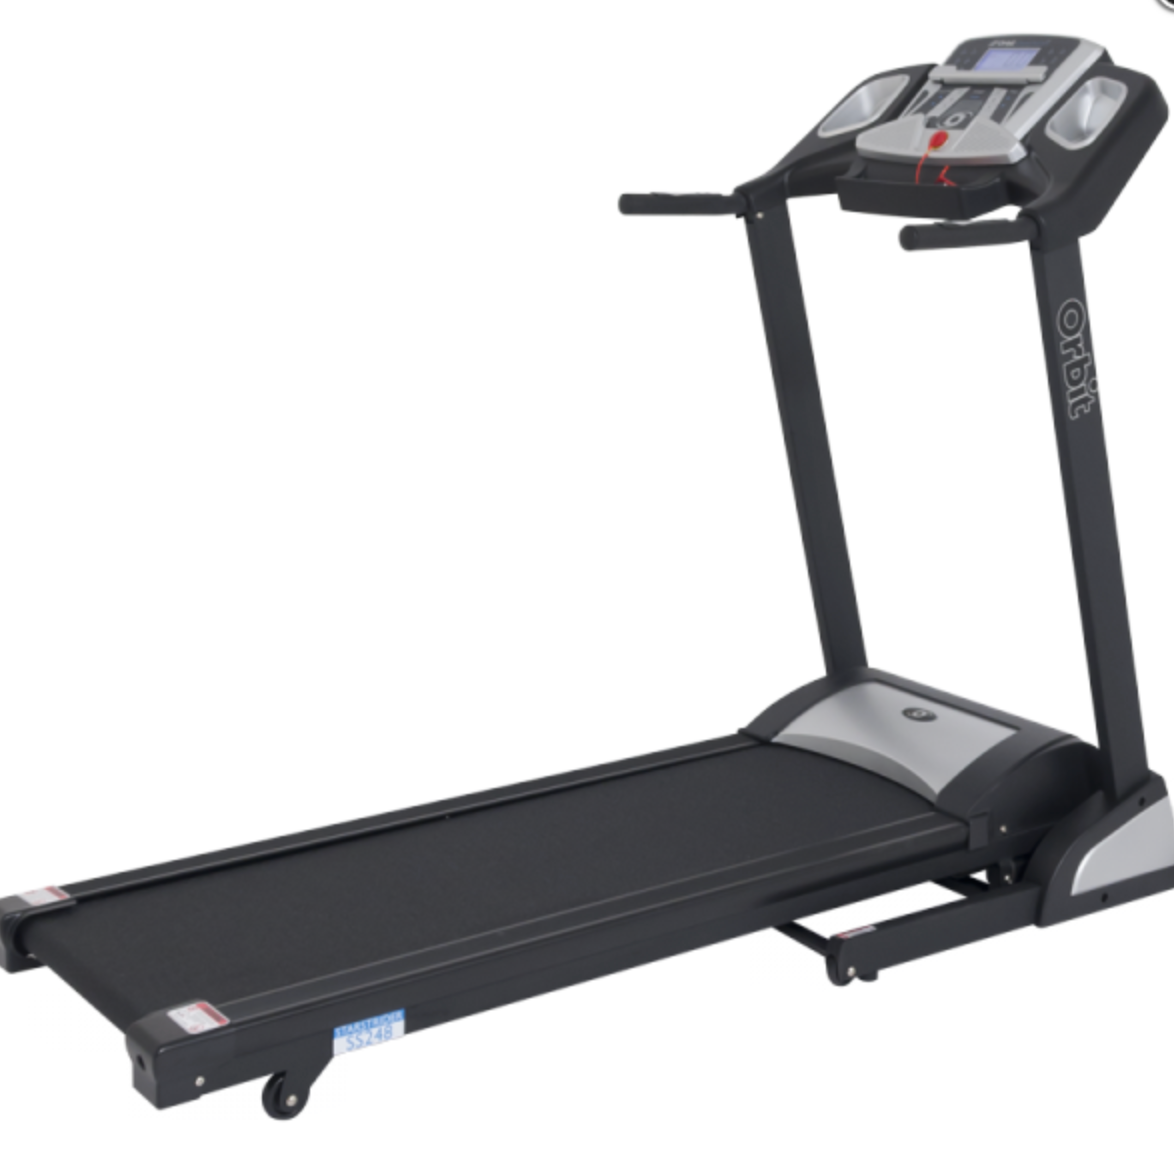 Star Strider Treadmill - 1.5 HP - Fitness Hero Brand new